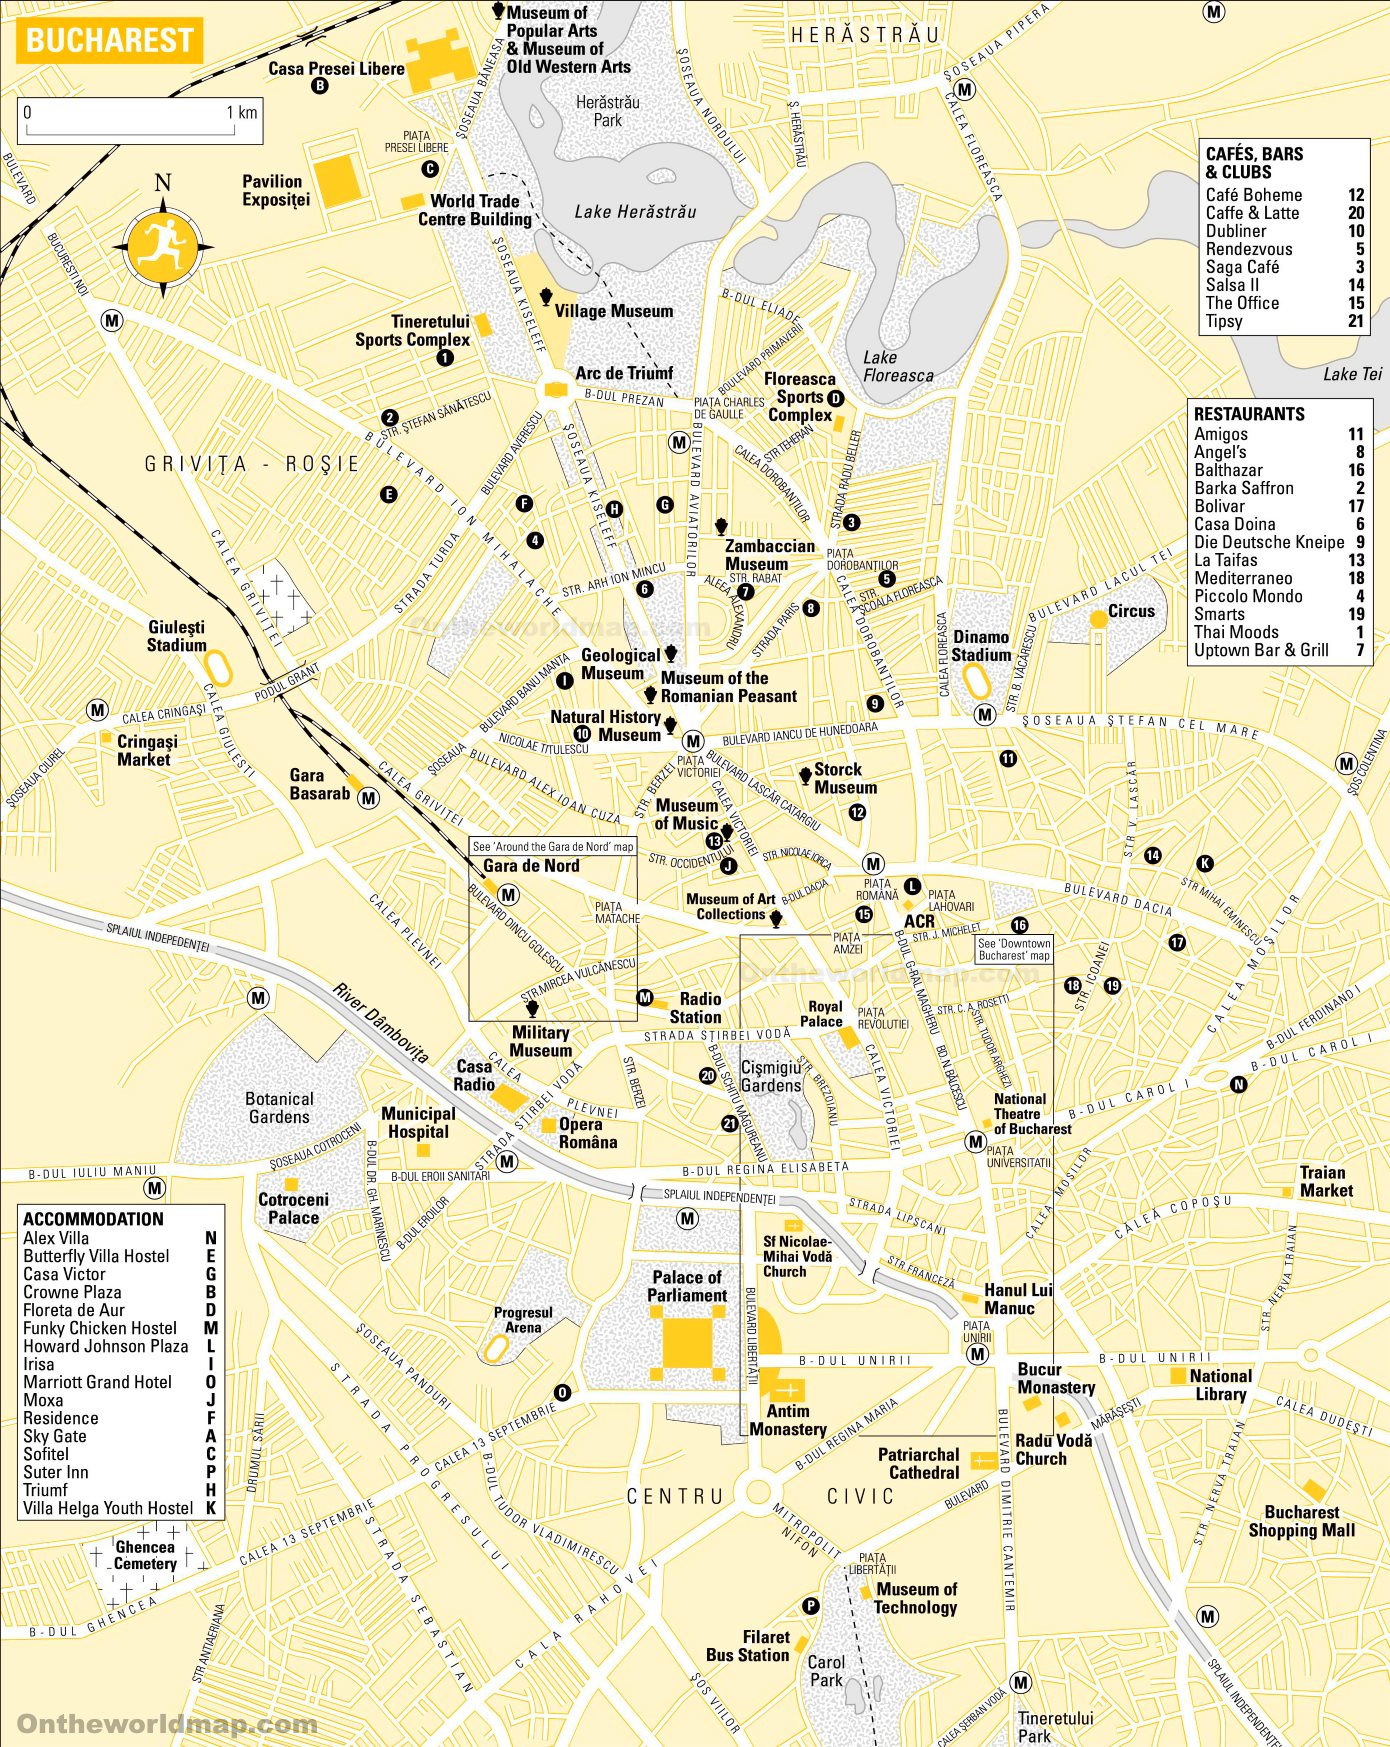 Bucharest Sightseeing Map - Ontheworldmap.com